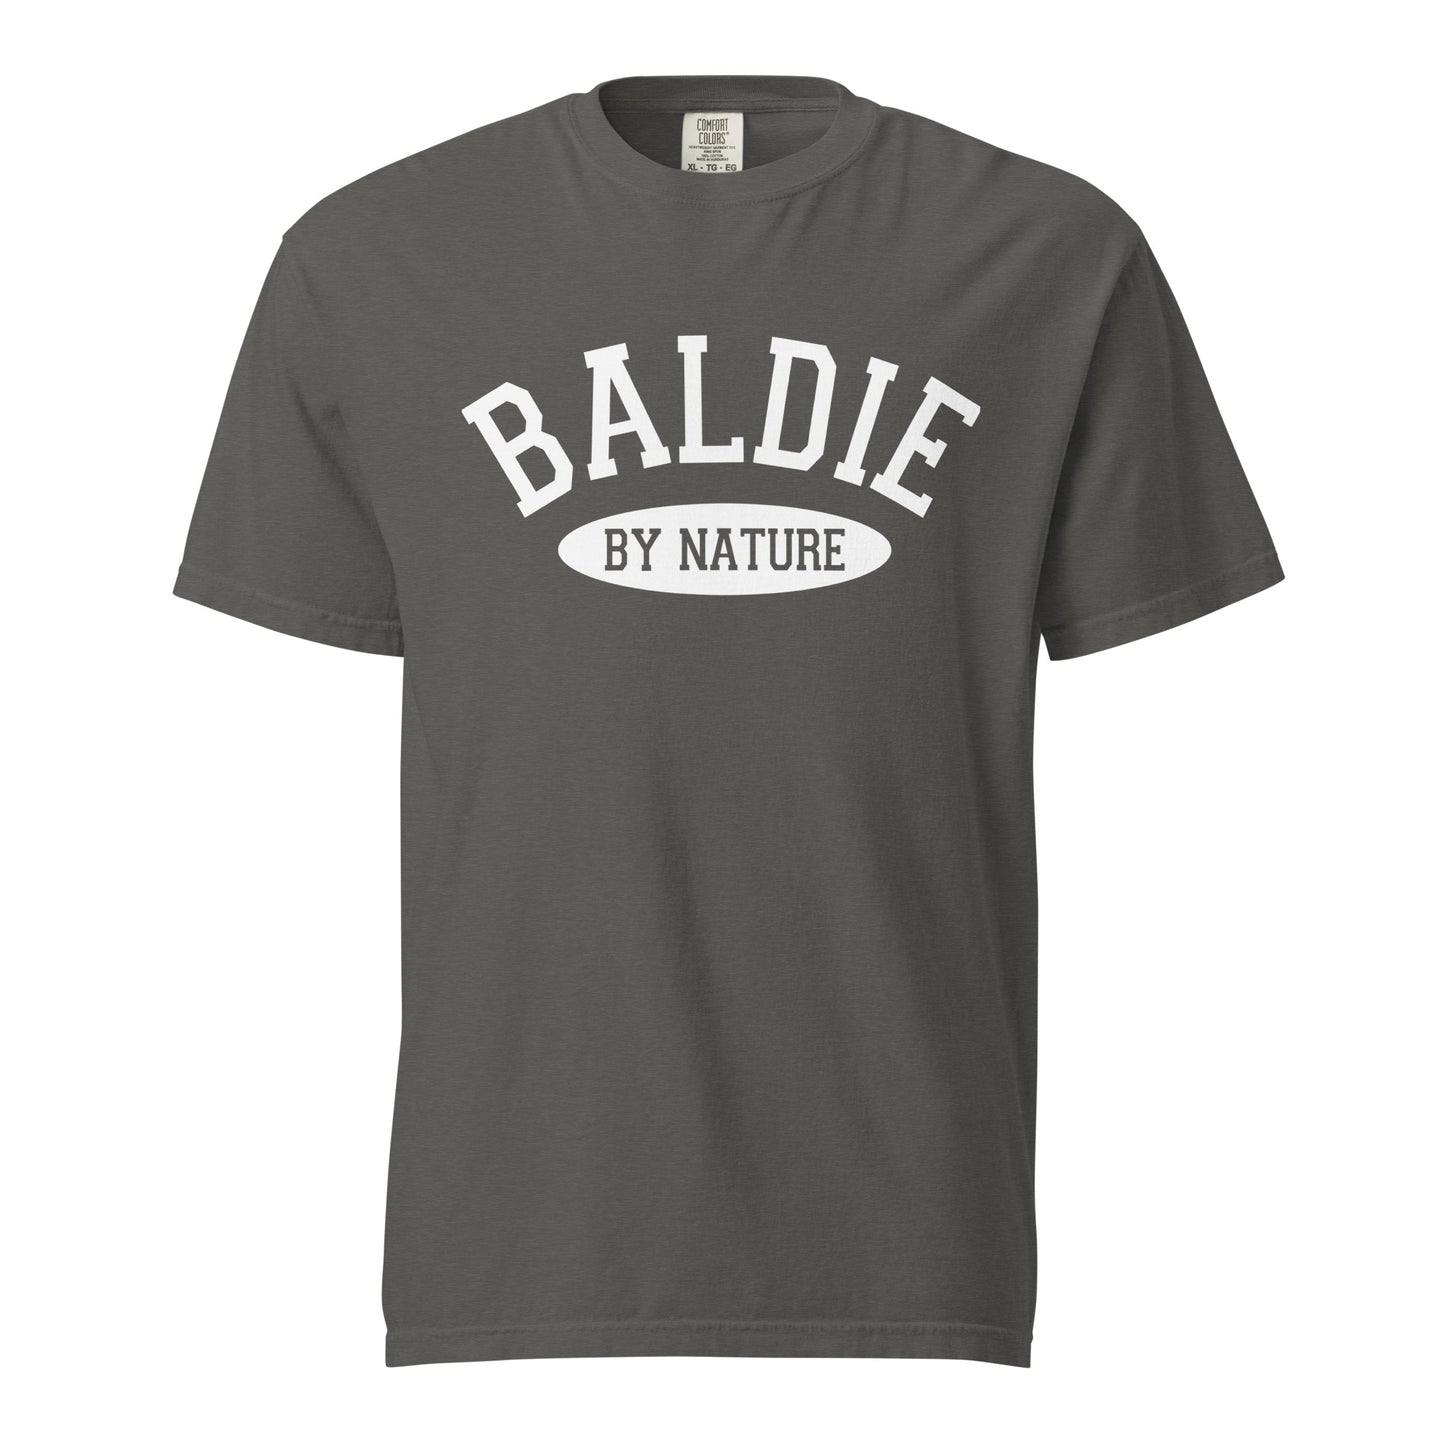 Baldie by Nature Shirt